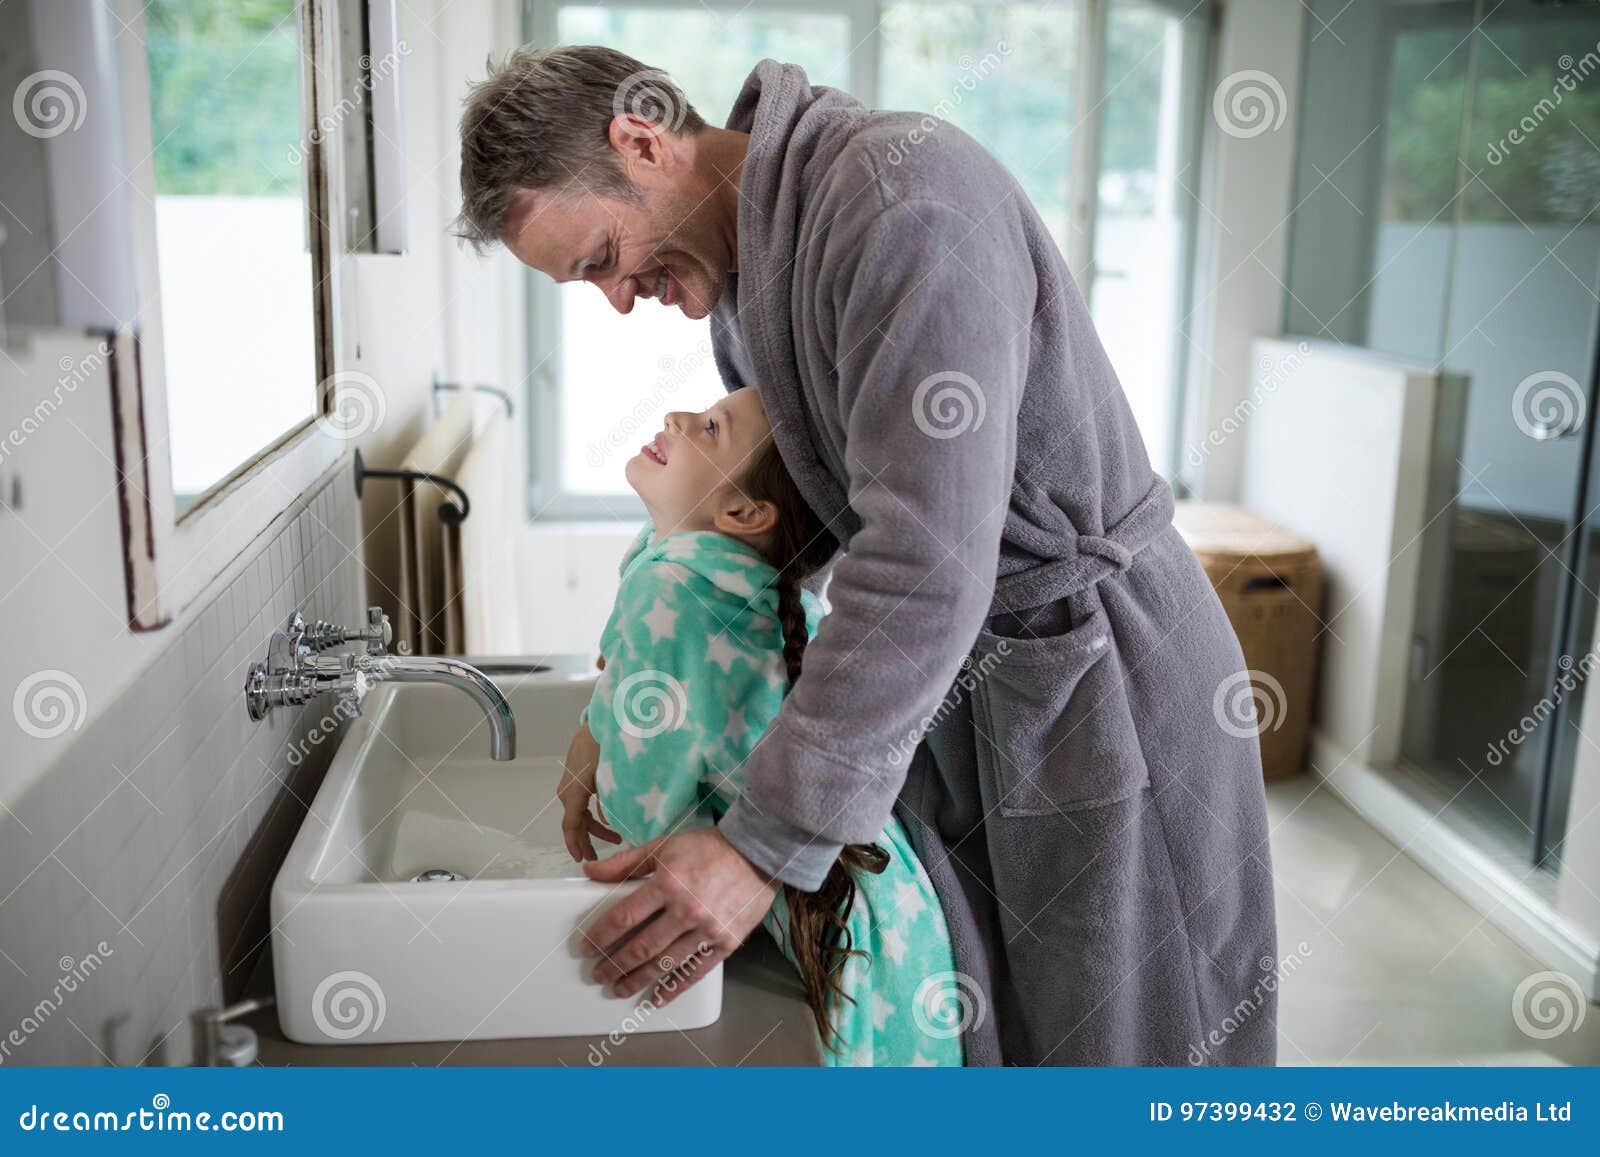 Daughter bath